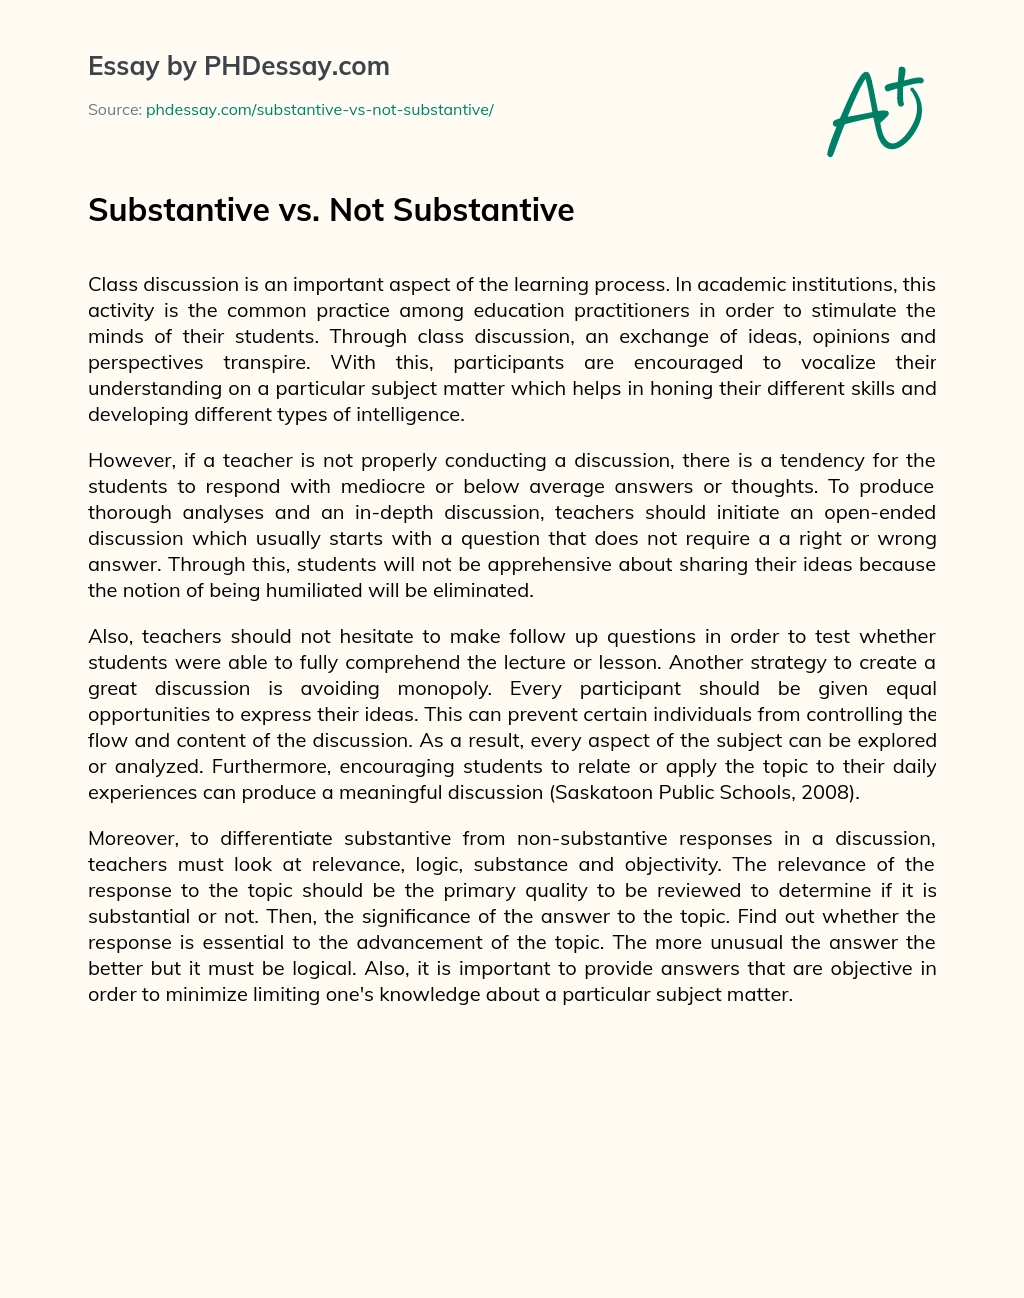 Substantive vs. Not Substantive essay